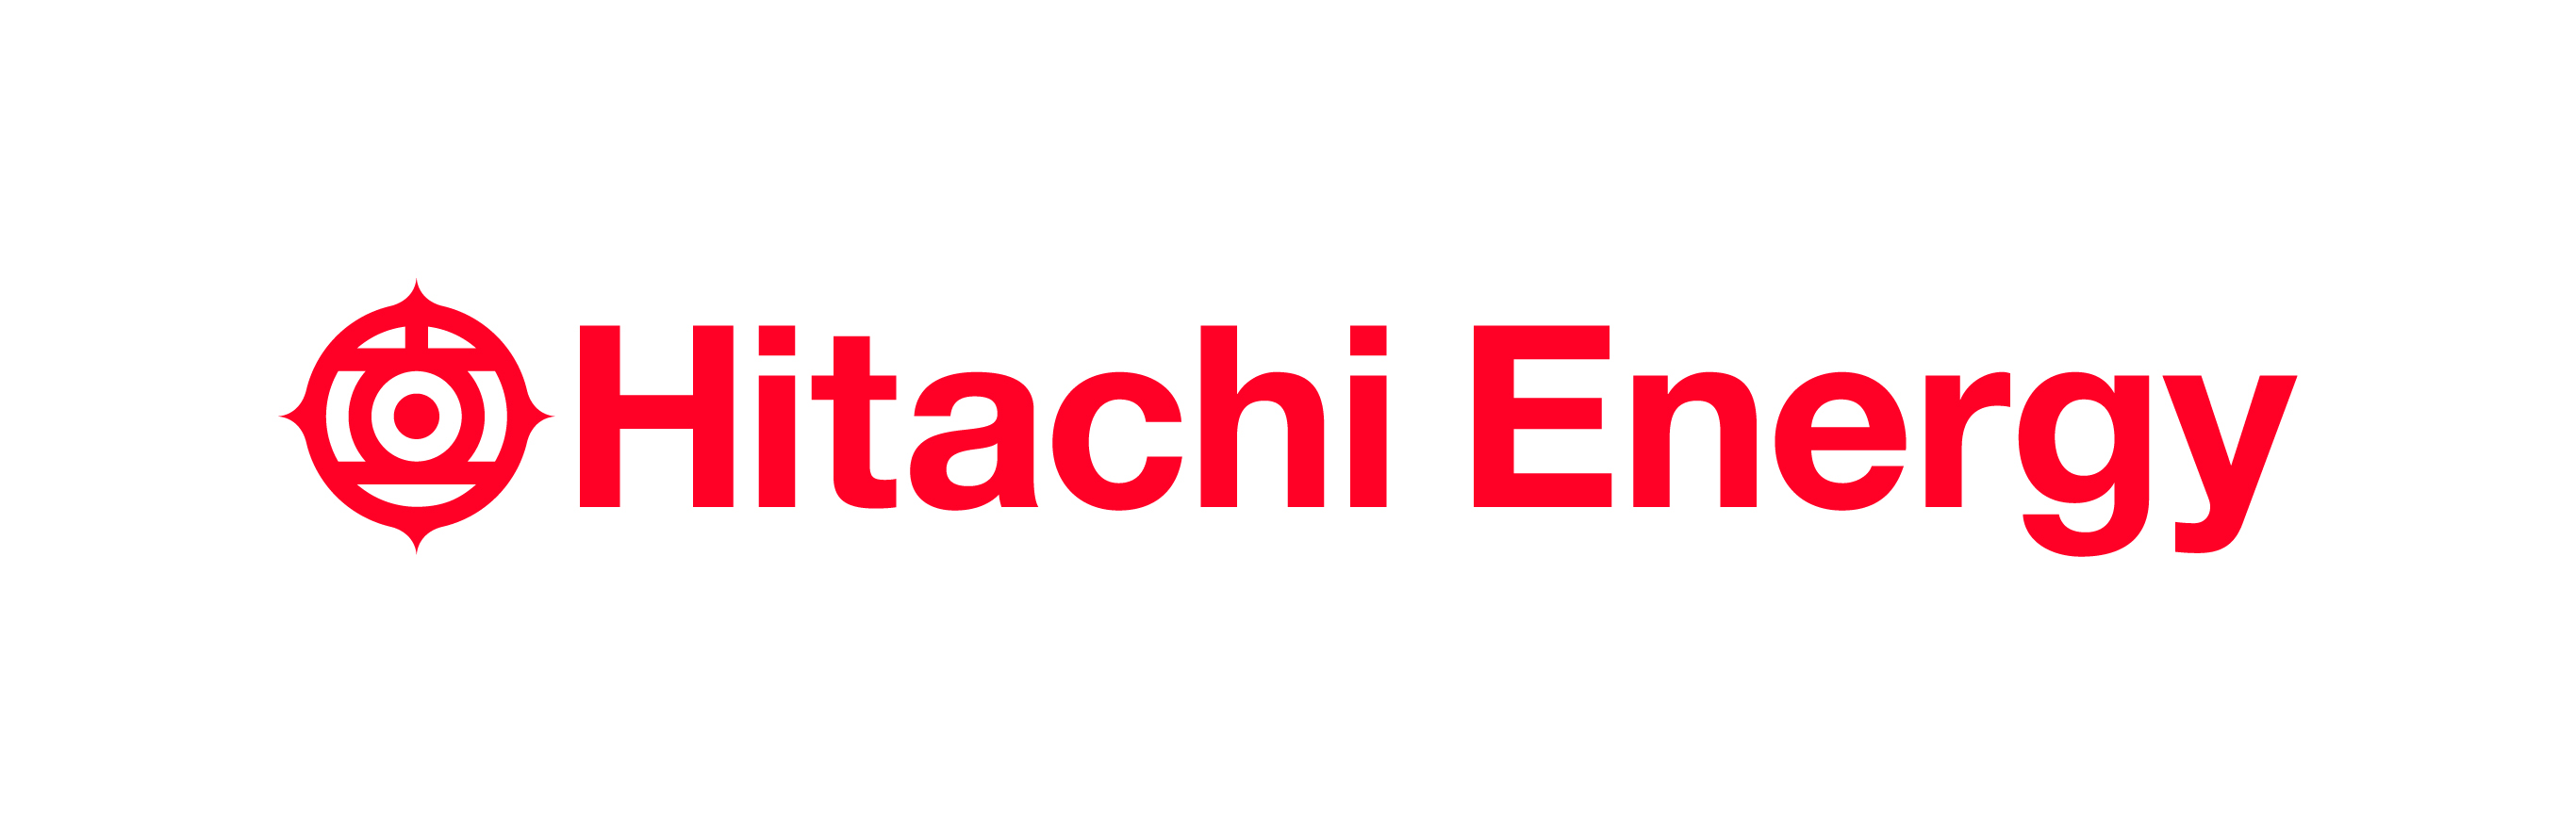 Hitachi Energy CompanyName_CMYK_Inspire red.png